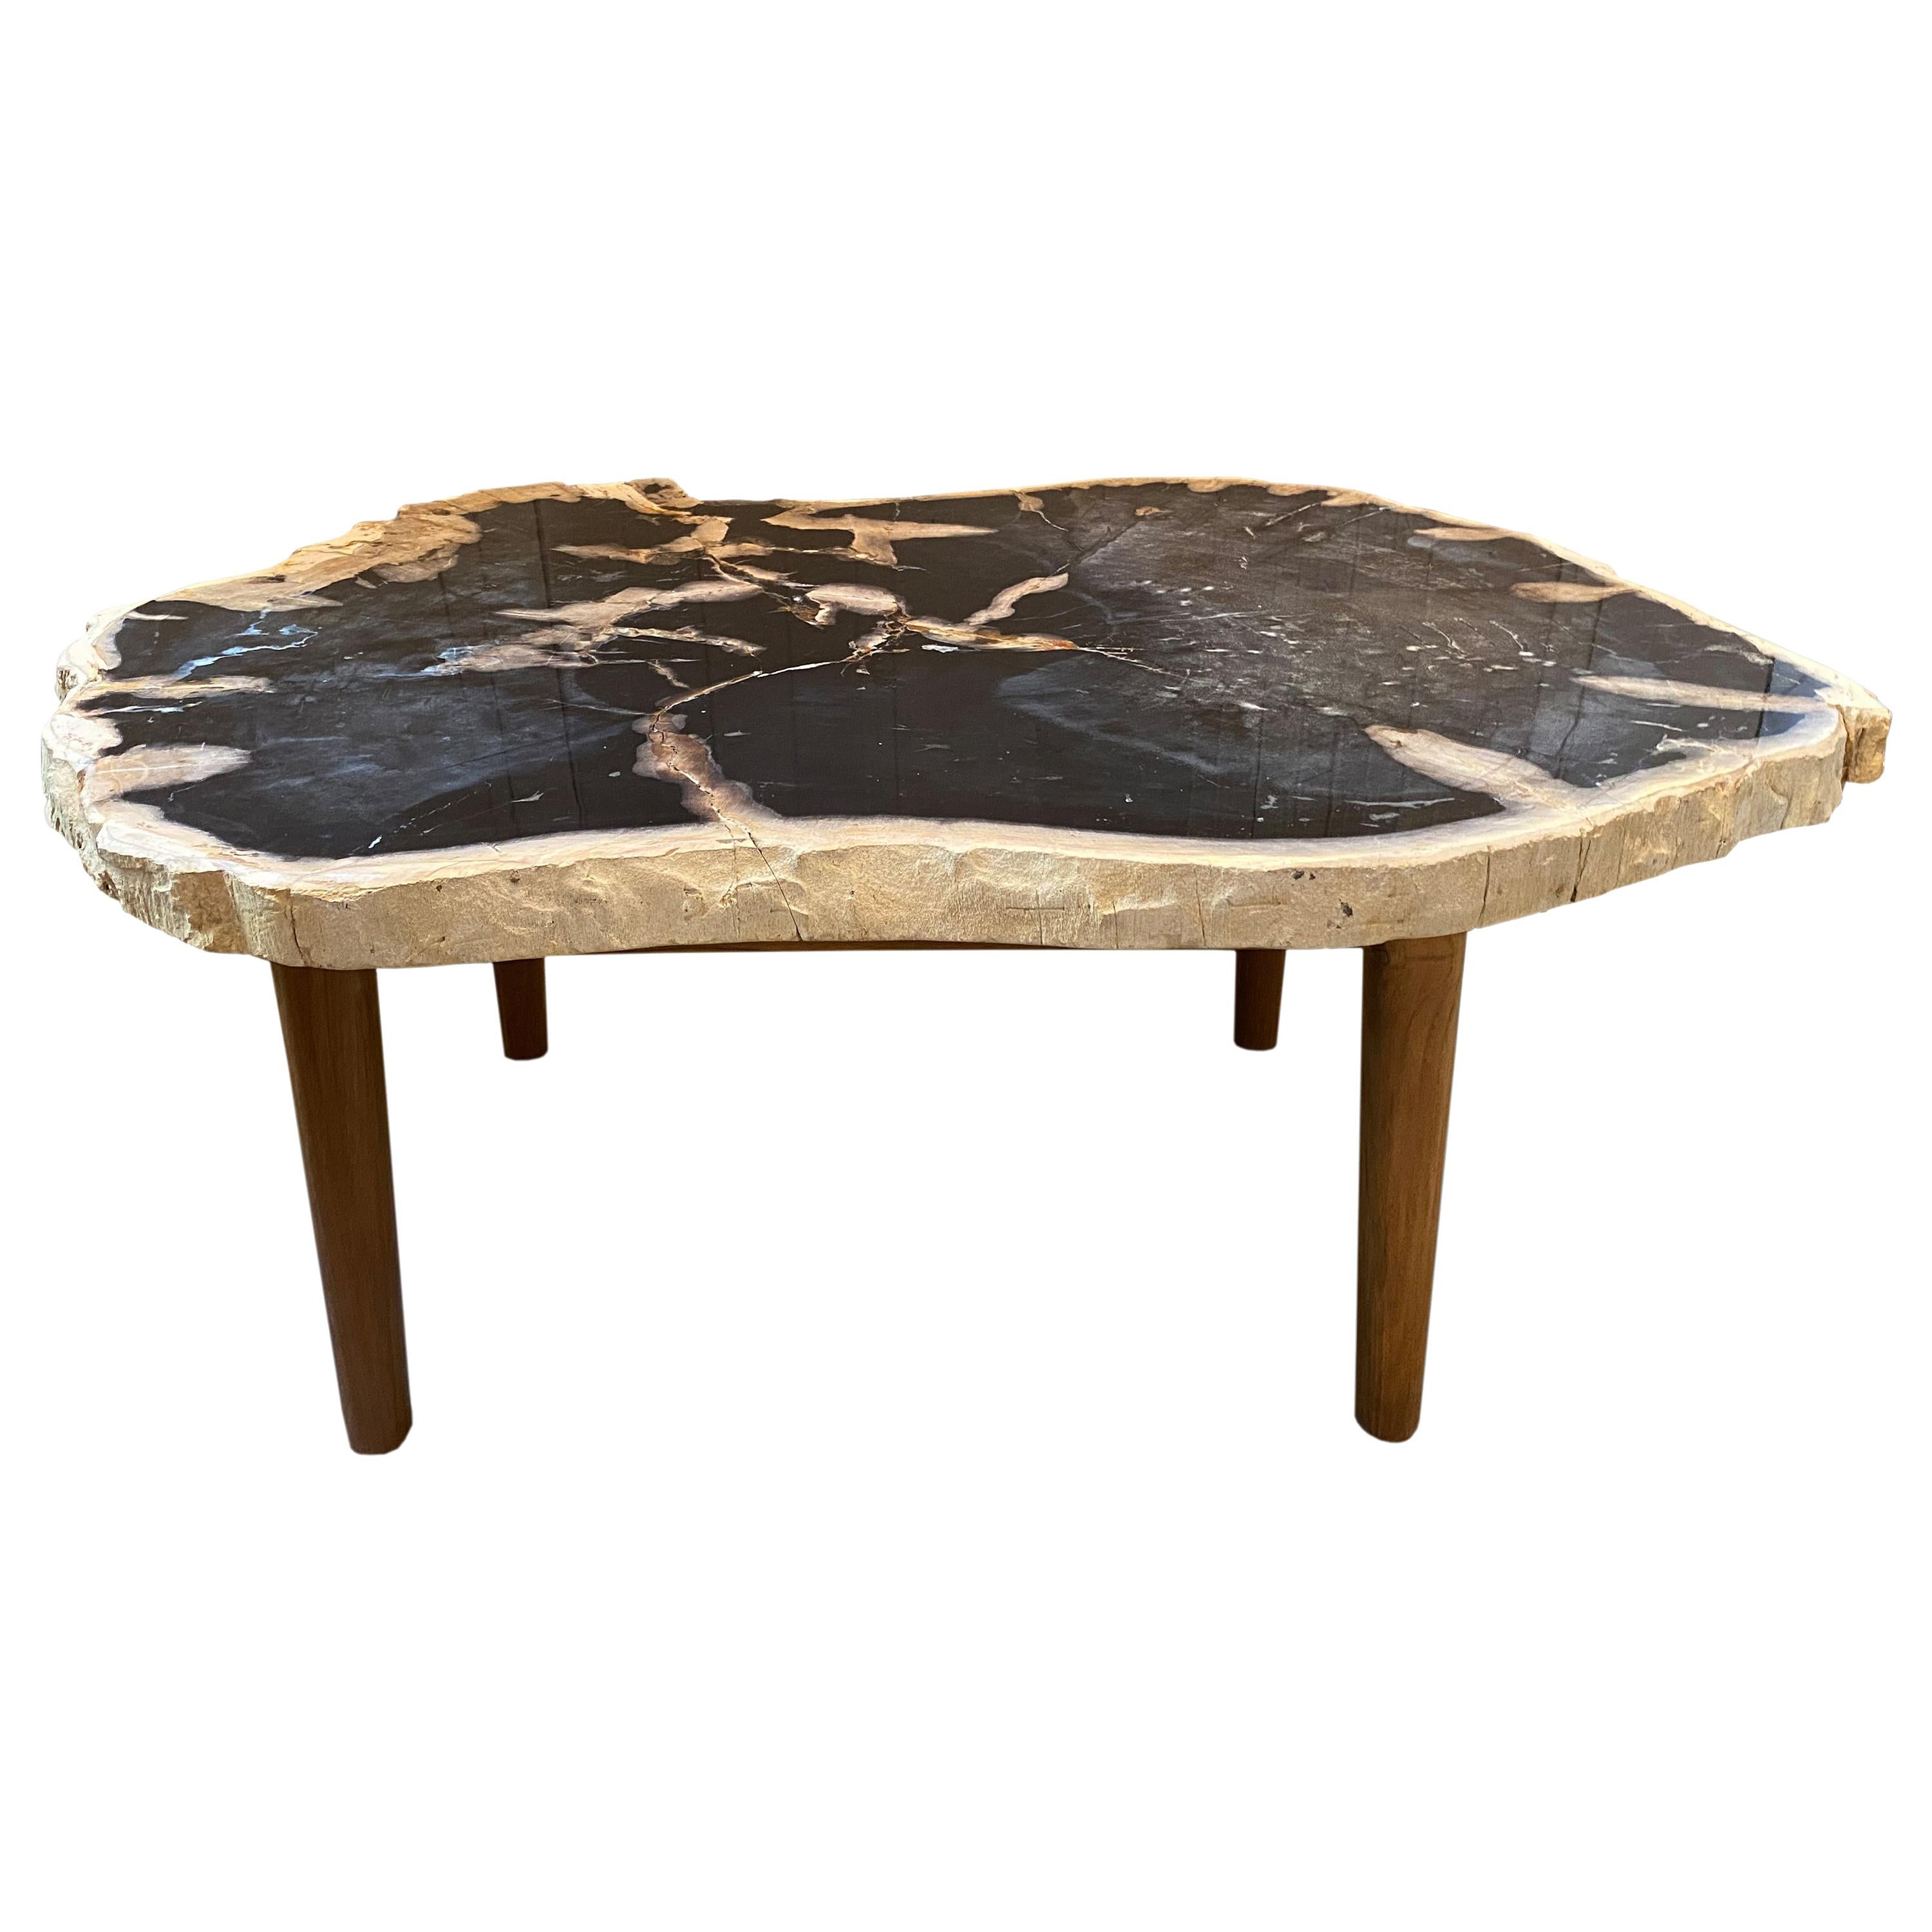 Andrianna Shamaris High Quality Petrified Wood Coffee Table with Teak Wood Base